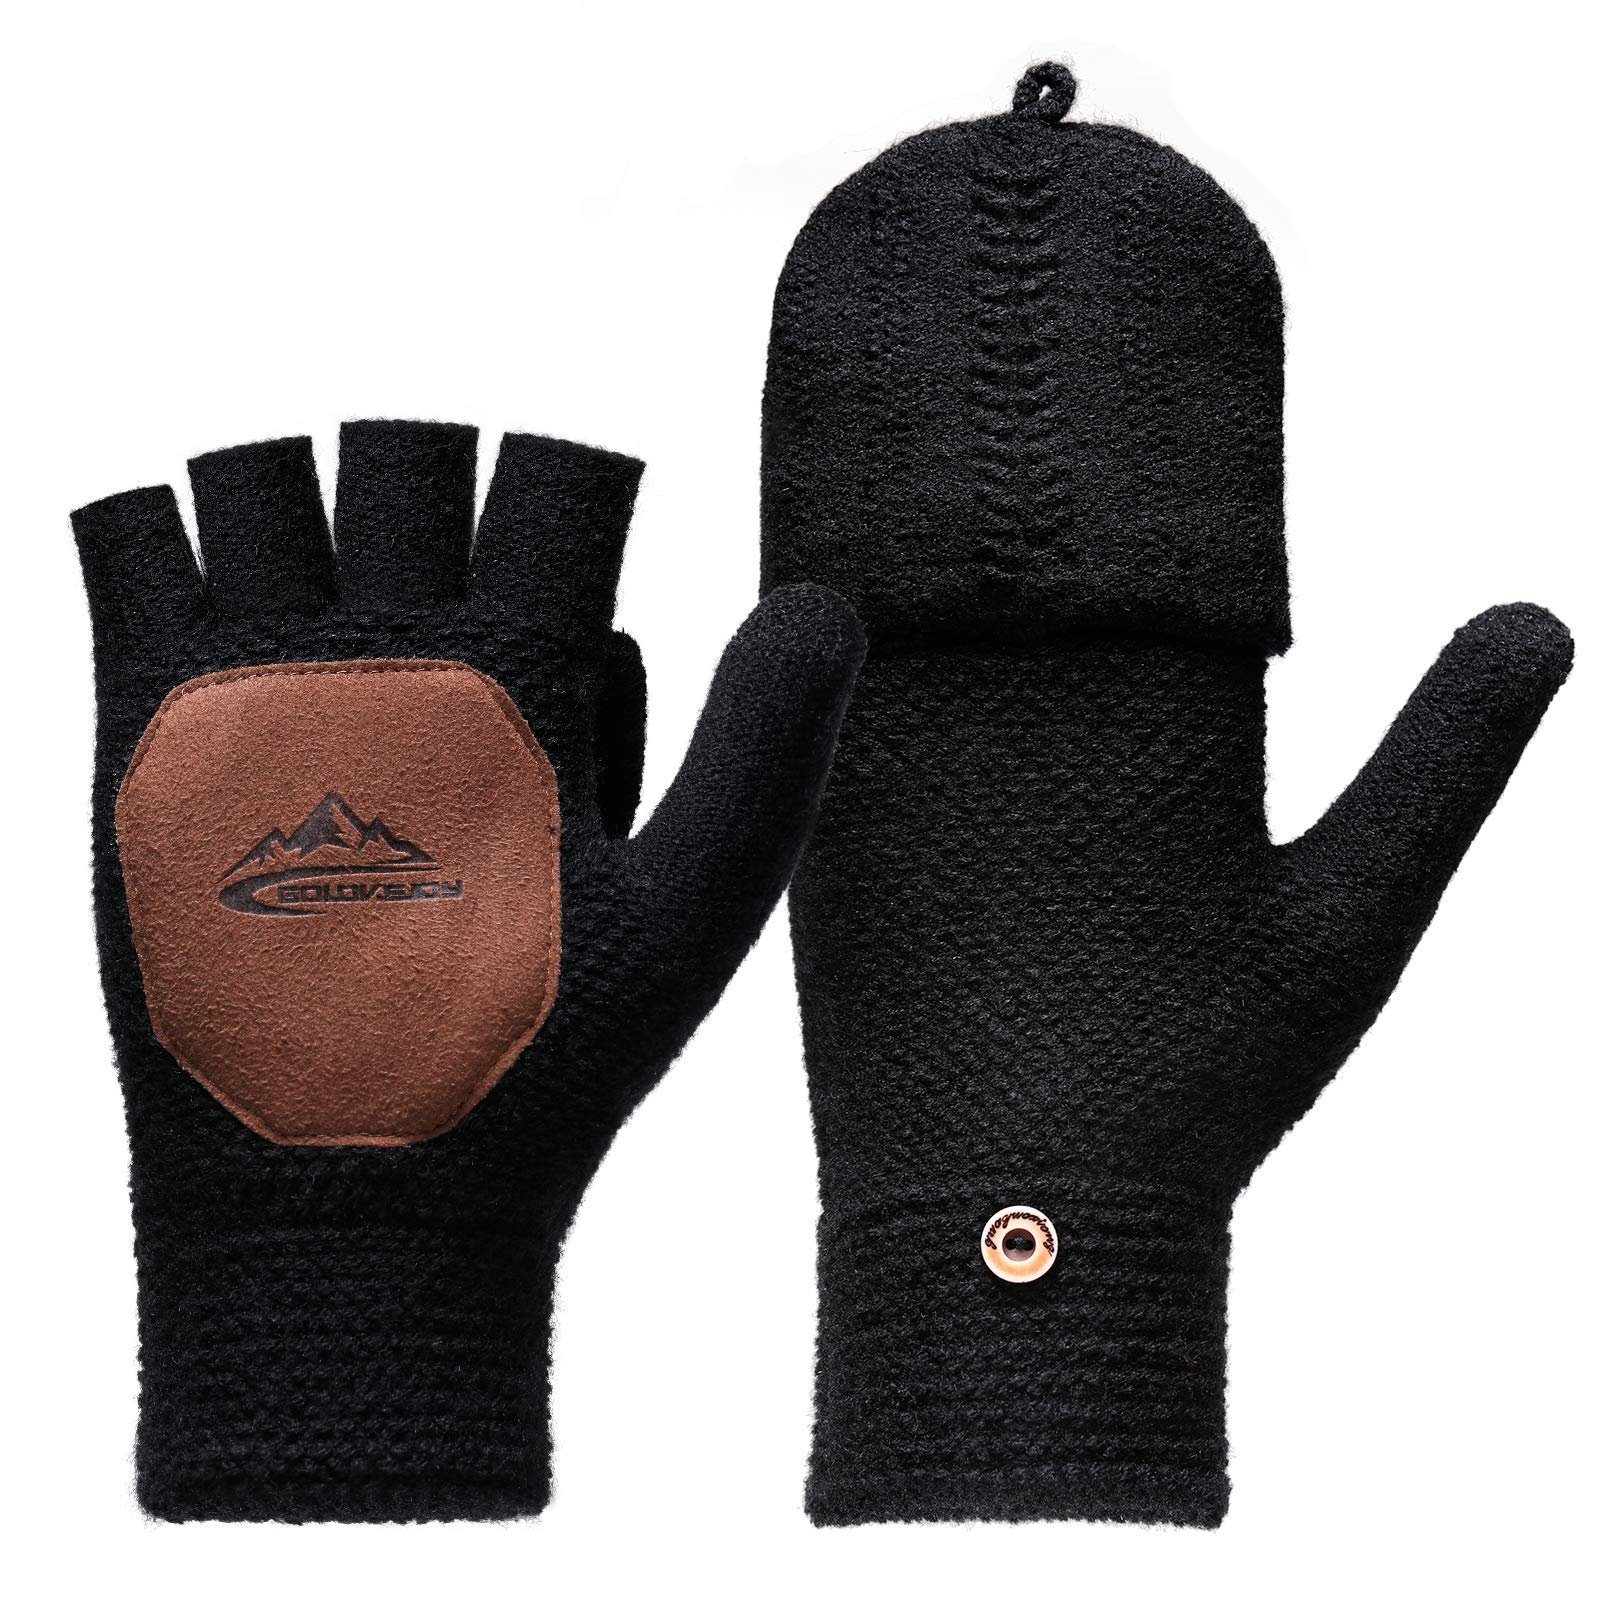 Haiaveng Strickhandschuhe Handschuhe für Männer und Frauen Warme Handschuhe schwarz | Strickhandschuhe